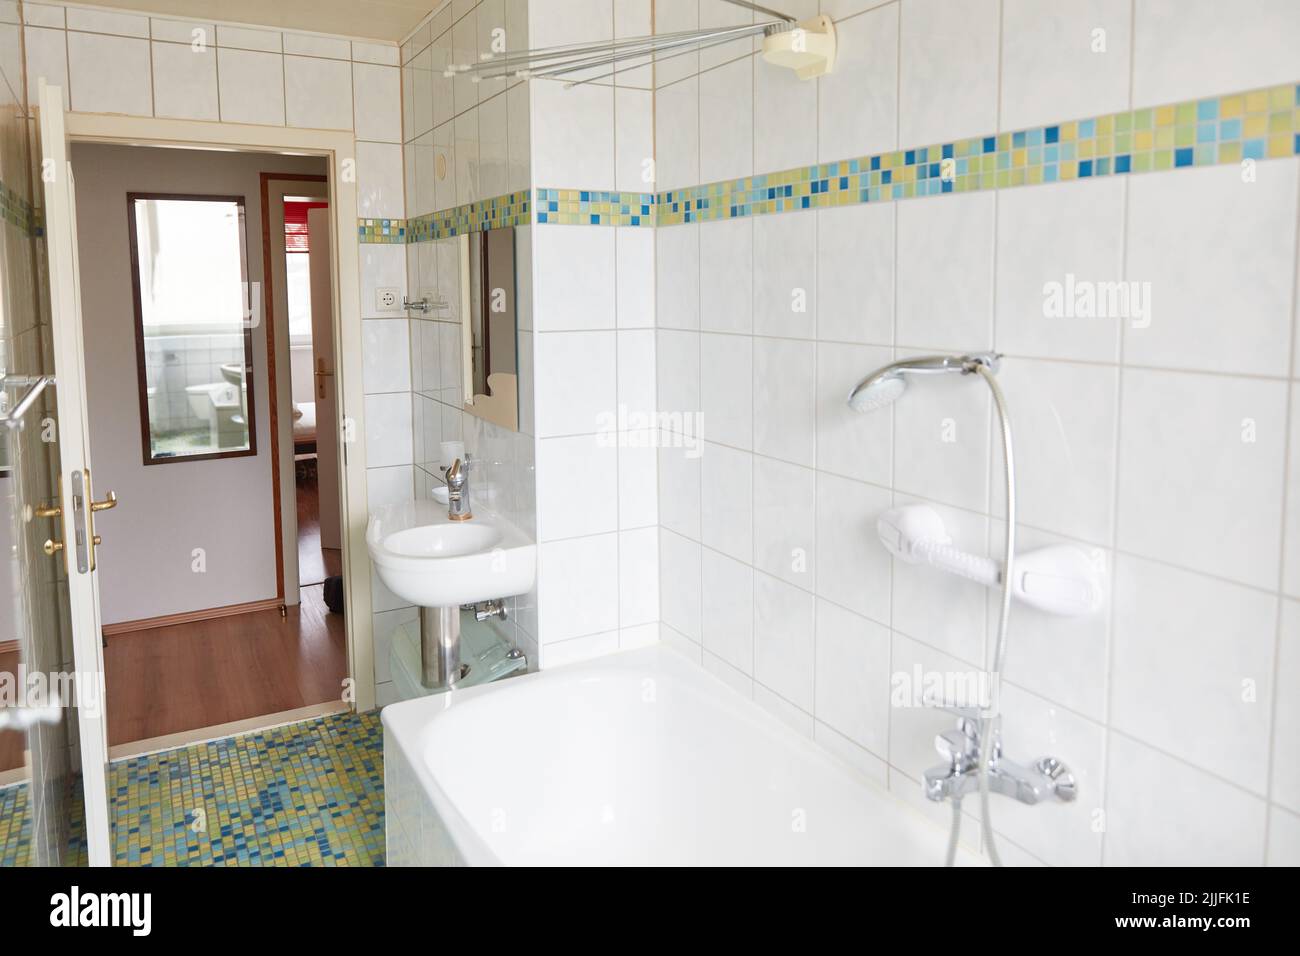 Bathtub and sink in bathroom or bathroom in an apartment Stock Photo